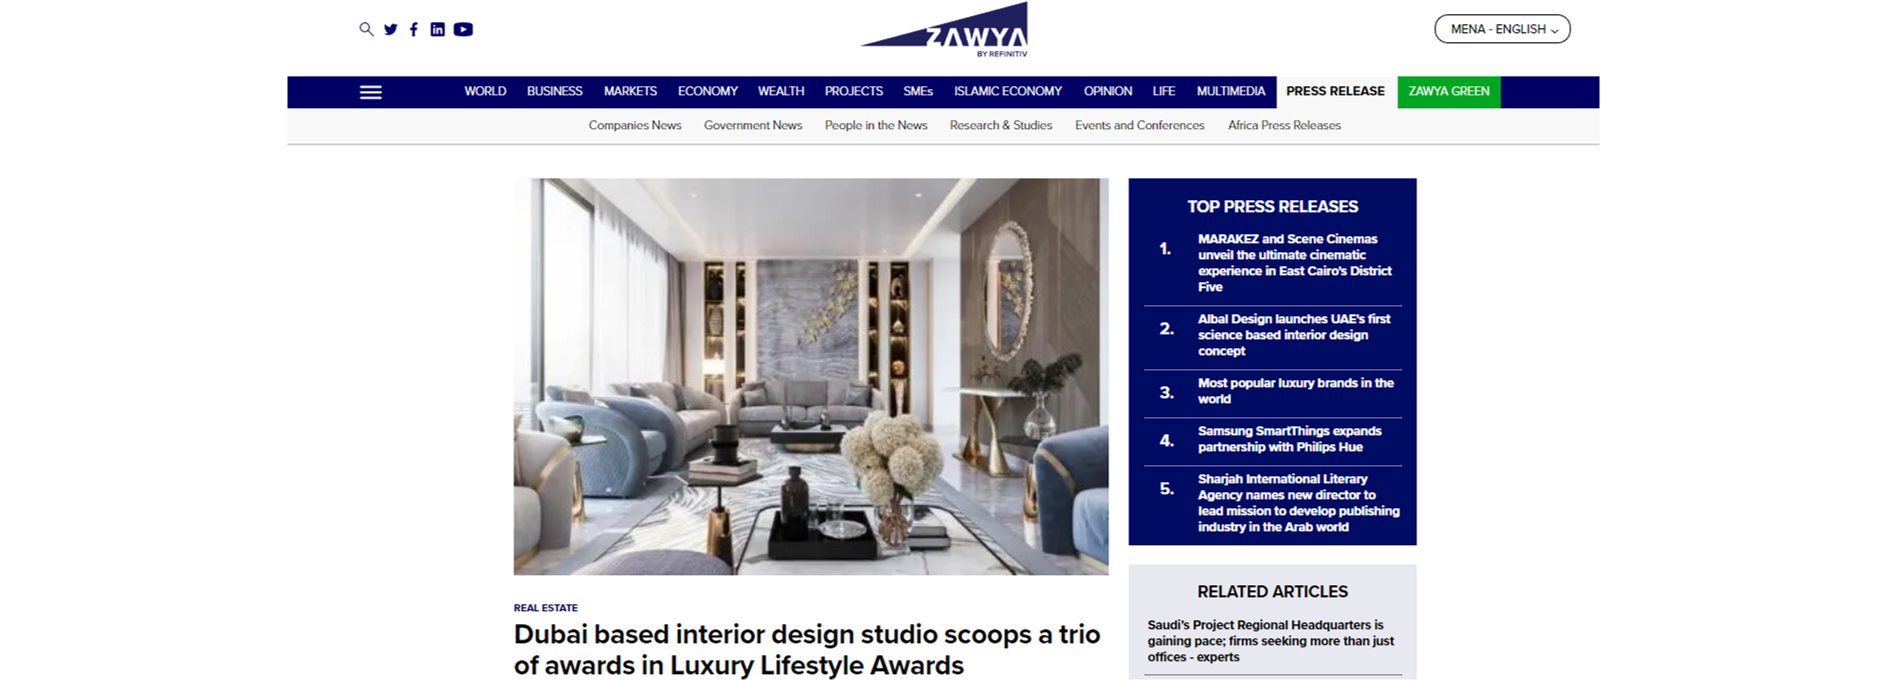 Dubai based interior design studio scoops a trio of awards in Luxury Lifestyle Awards